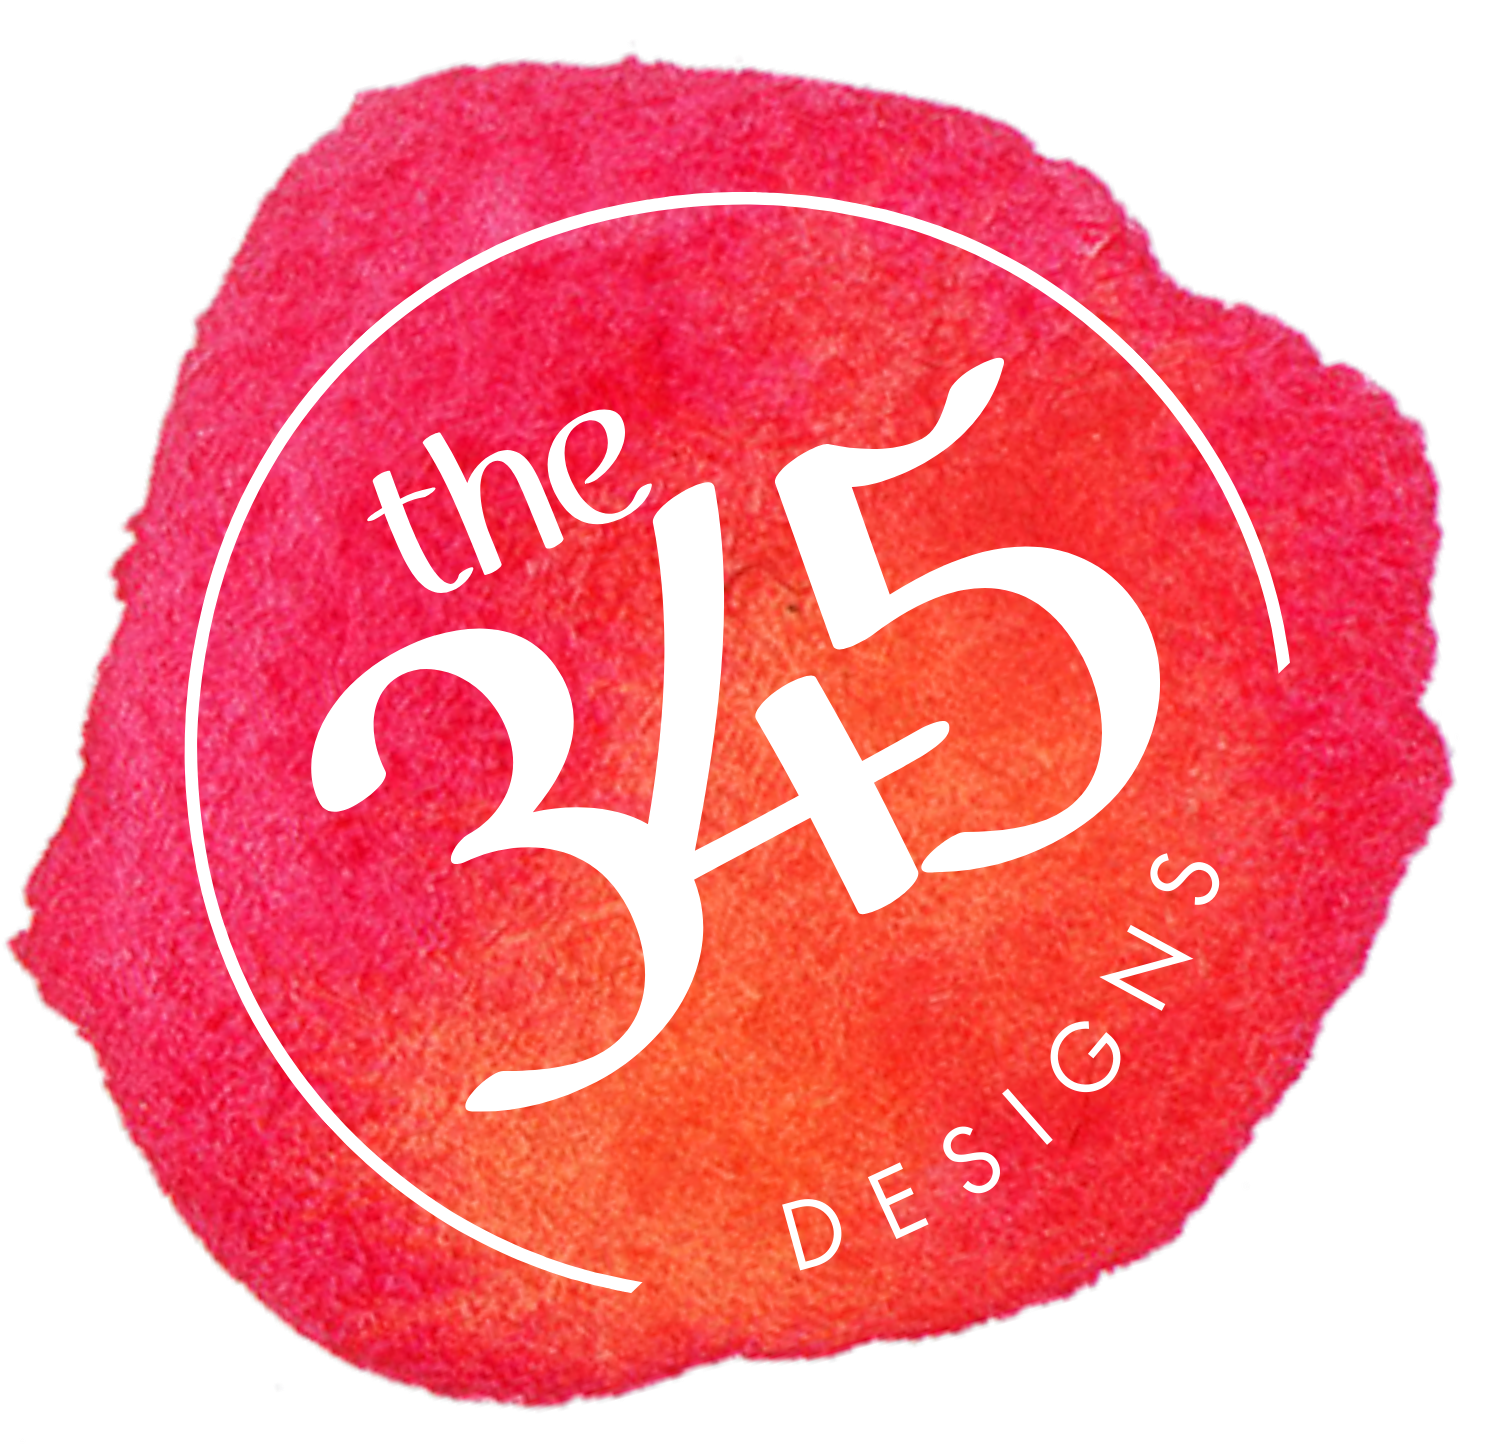 the 345 designs